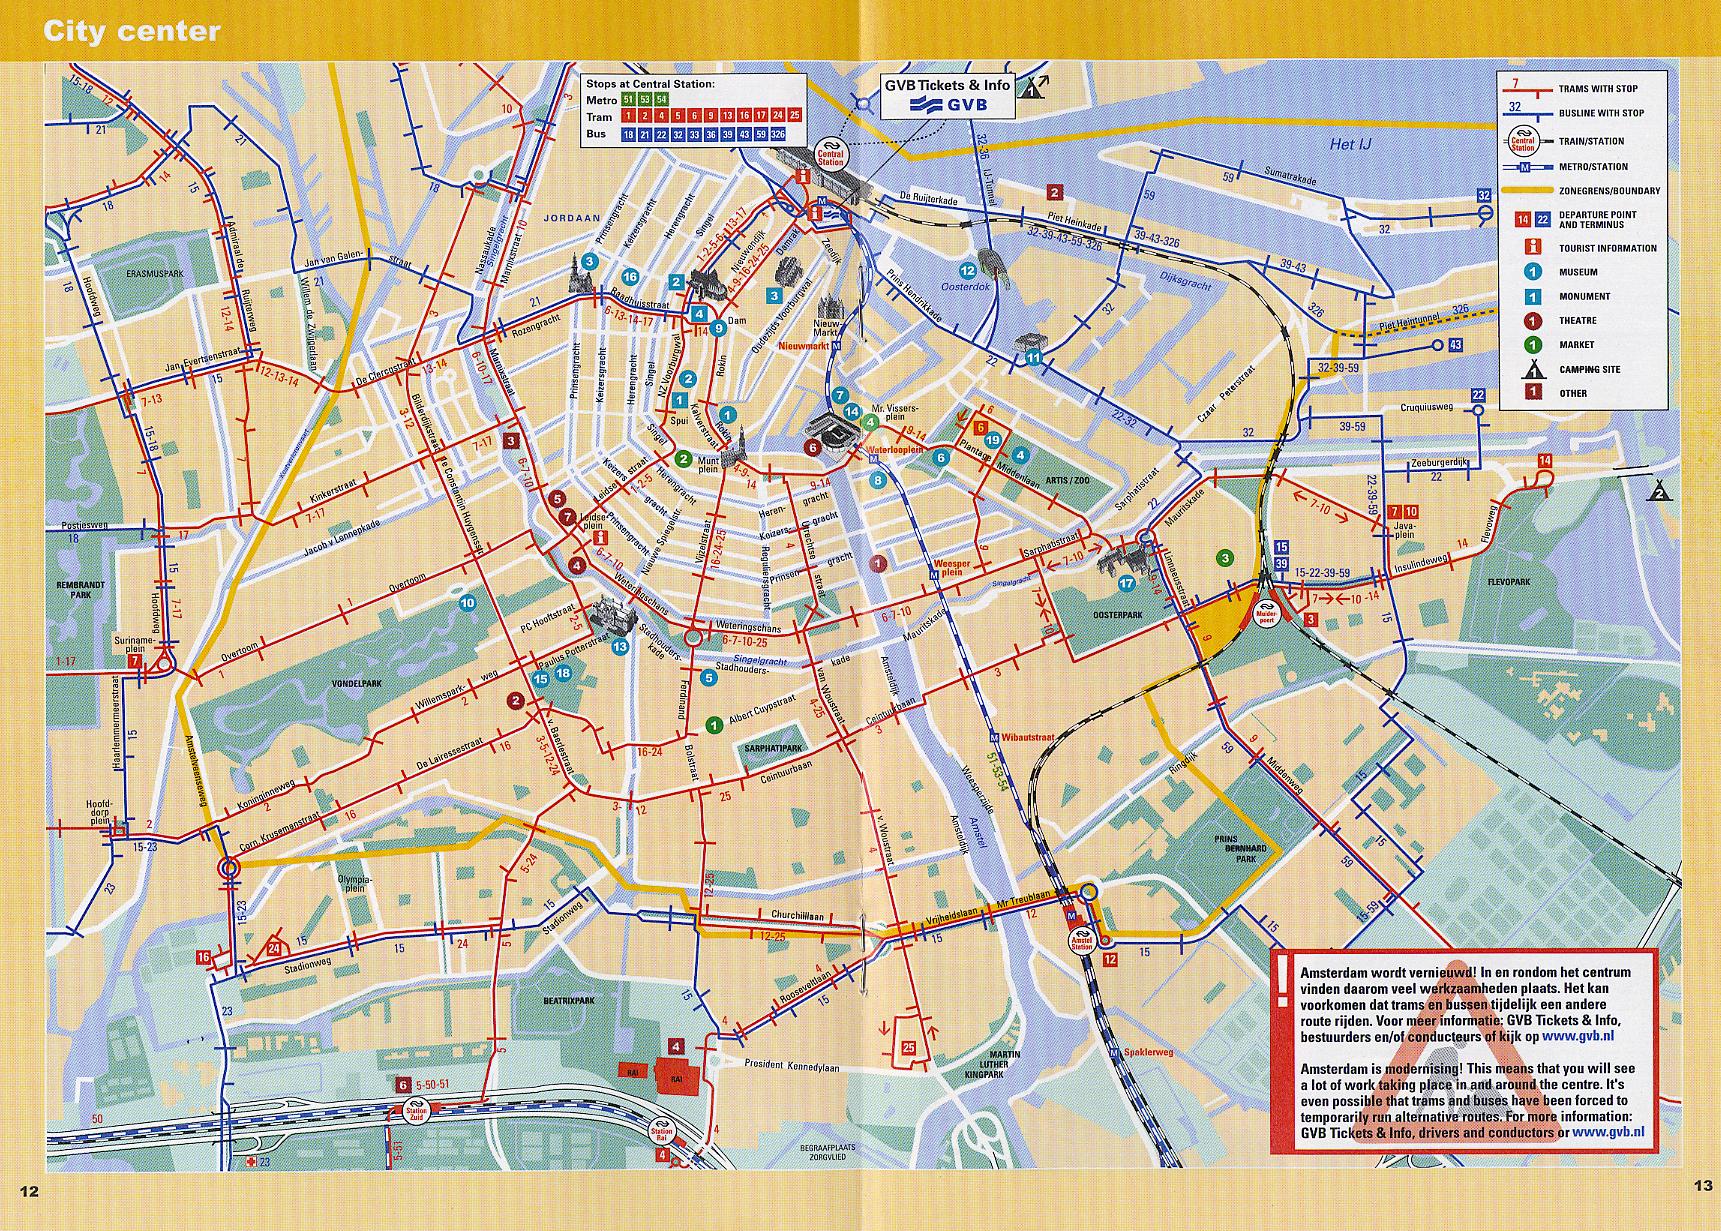 Image AmsterdamTramsMap.web.jpg, size 690533 b